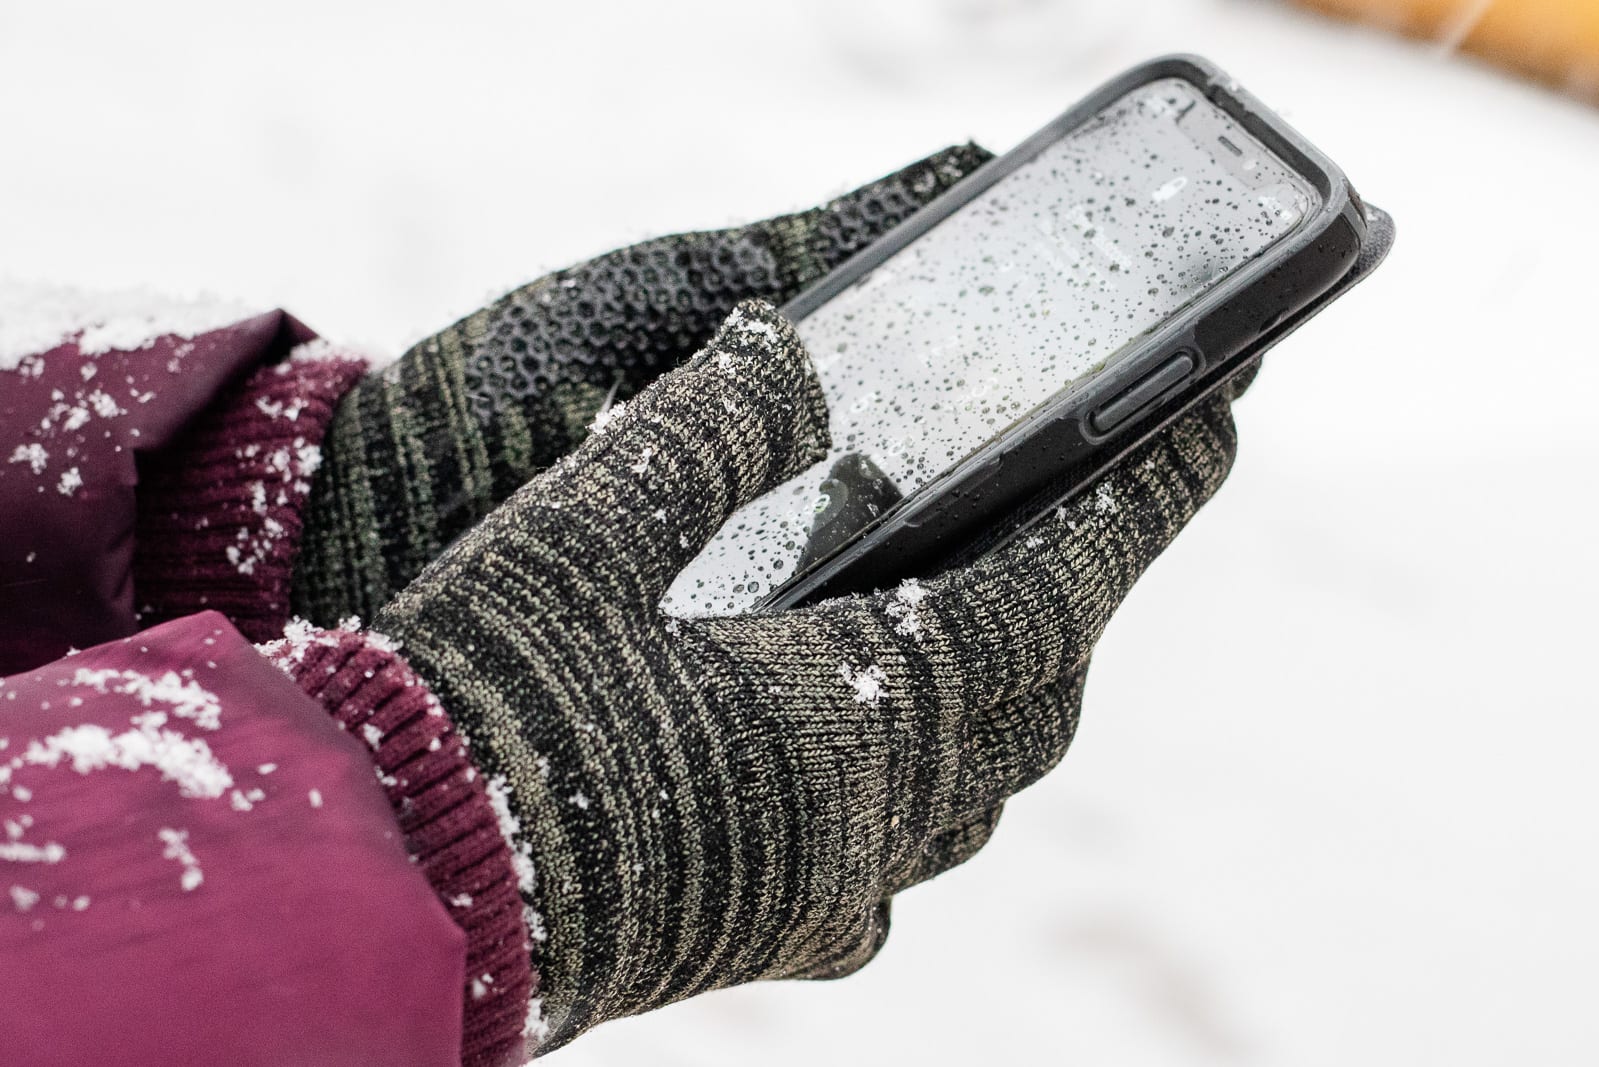 MYEDO Unisex Fashion Touchscreen Gloves Texting Driving Fleece Lining for Riding Medium, Blue